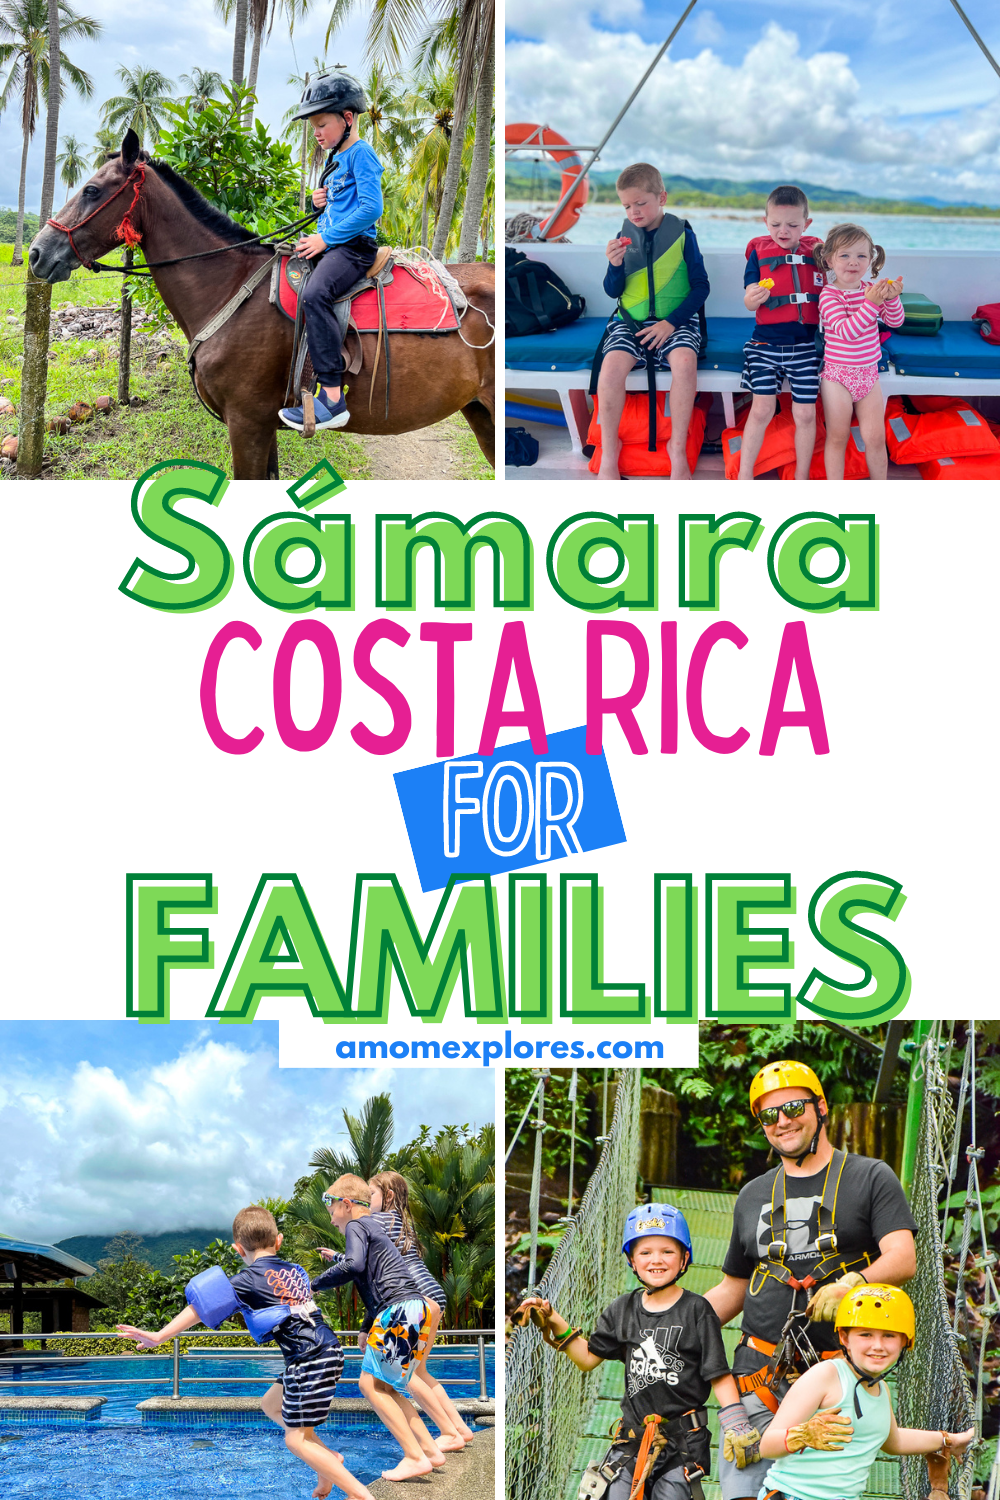 Samara Costa Rica for Families.png